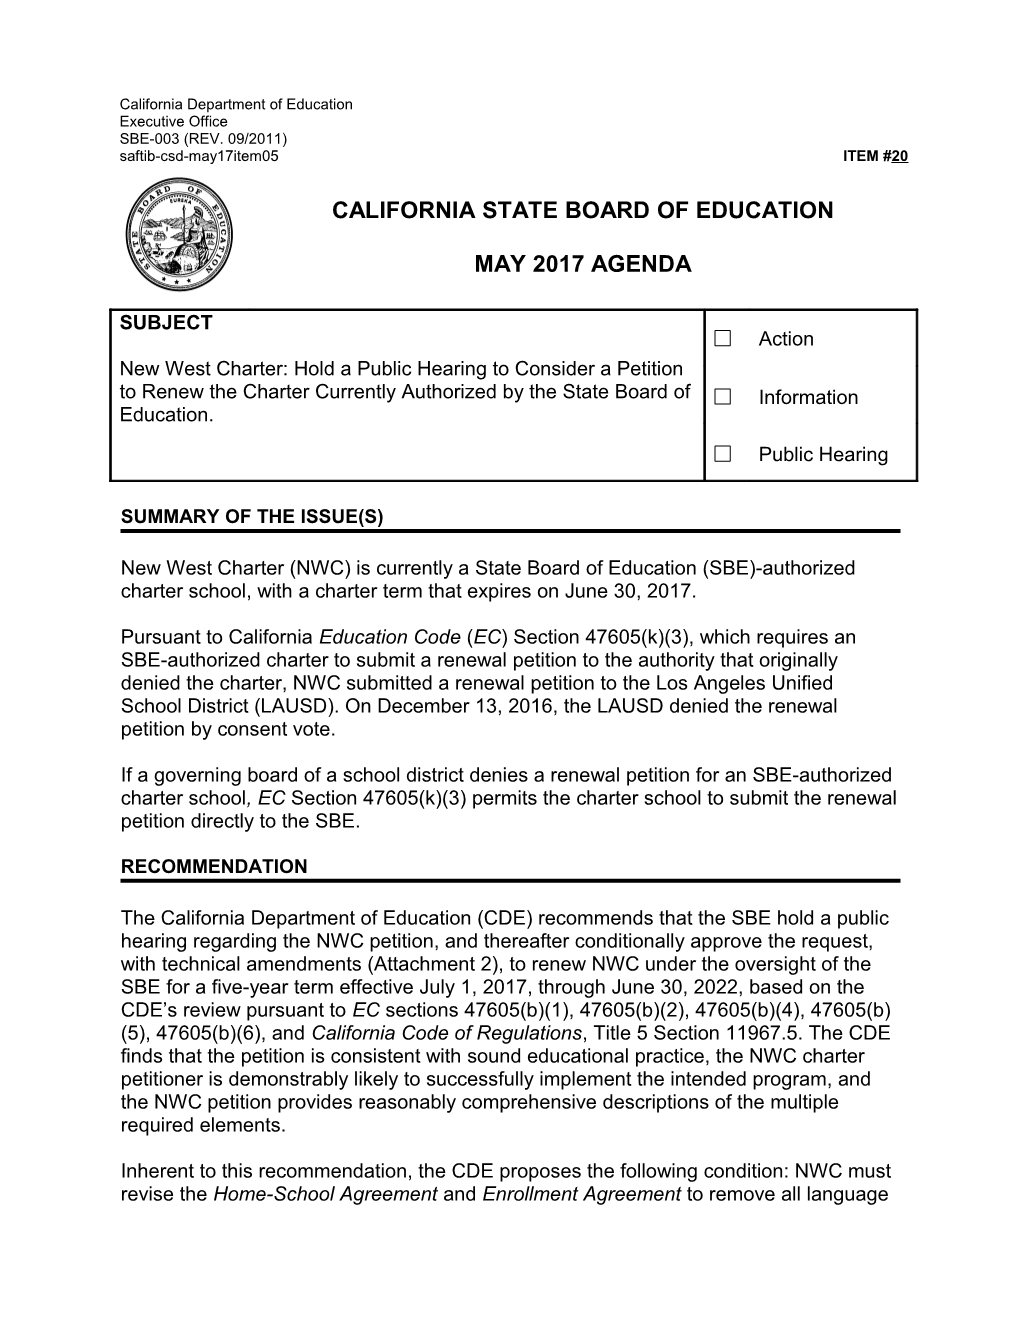 May 2017 Agenda Item 20 - Meeting Agendas (CA State Board of Education)